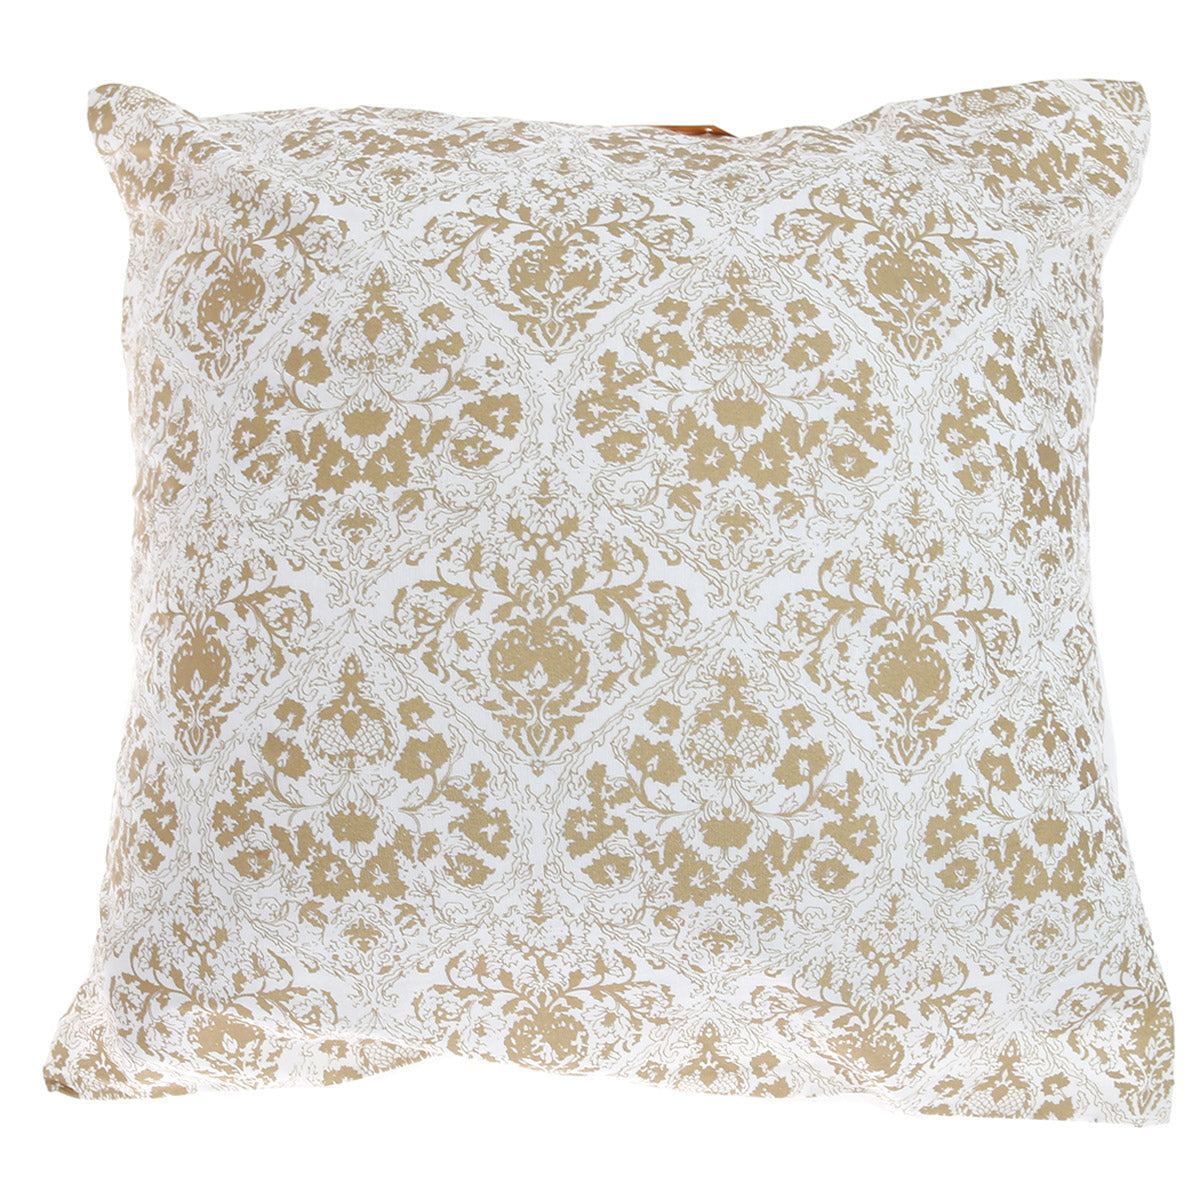 White Floral Cushion Cover 18x18